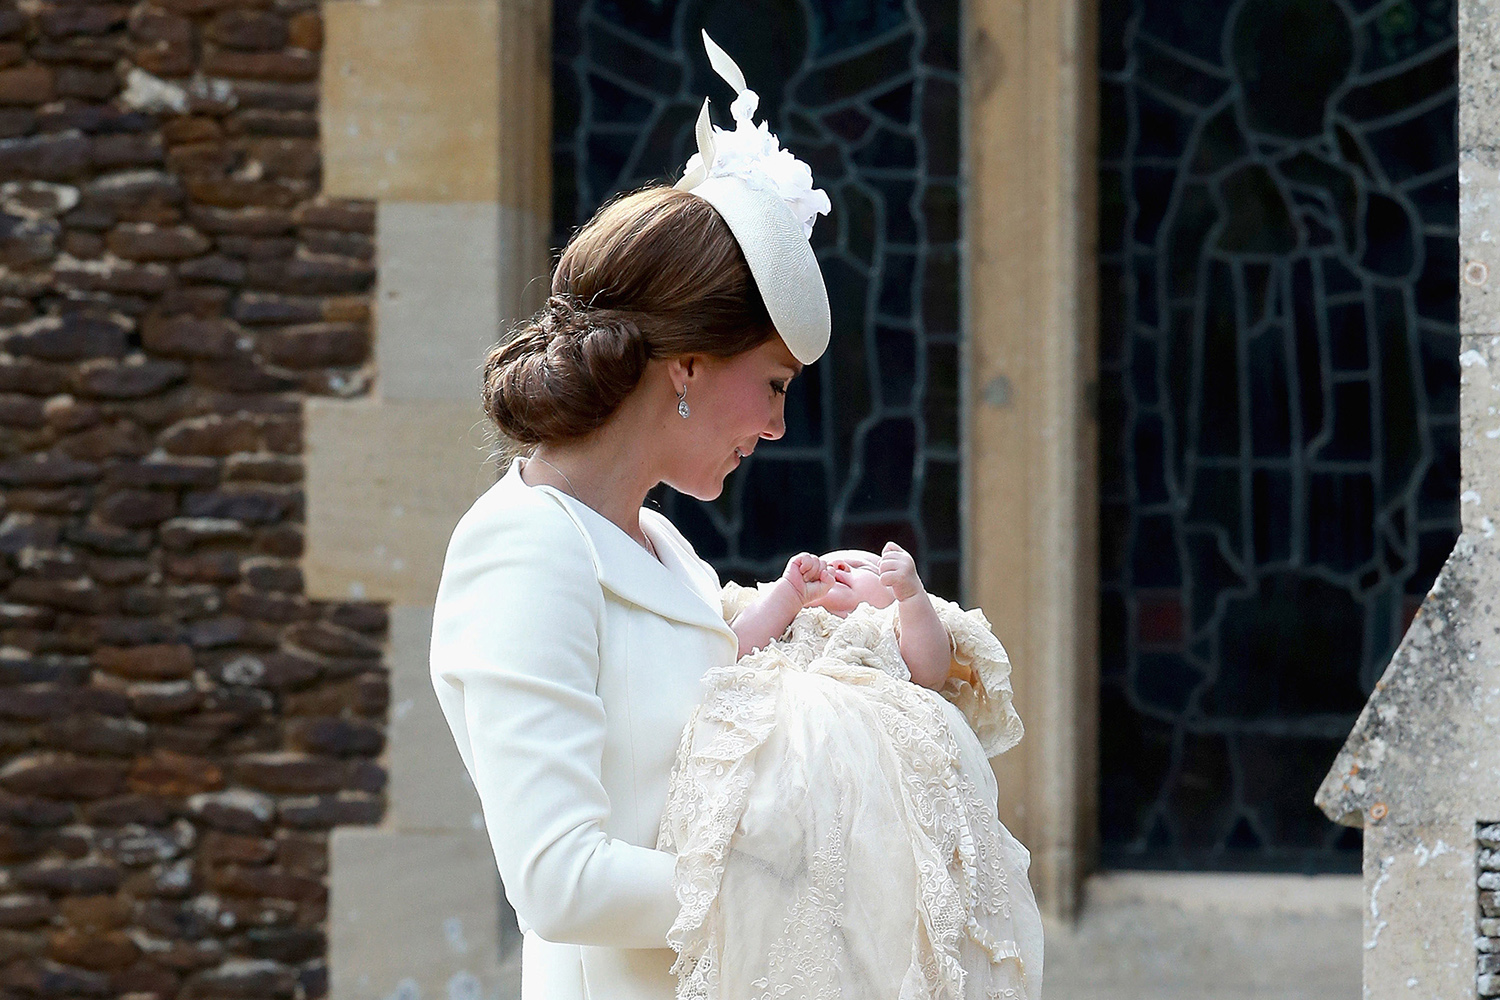 Guillermo de Inglaterra bautiza a su hija recordando a Diana